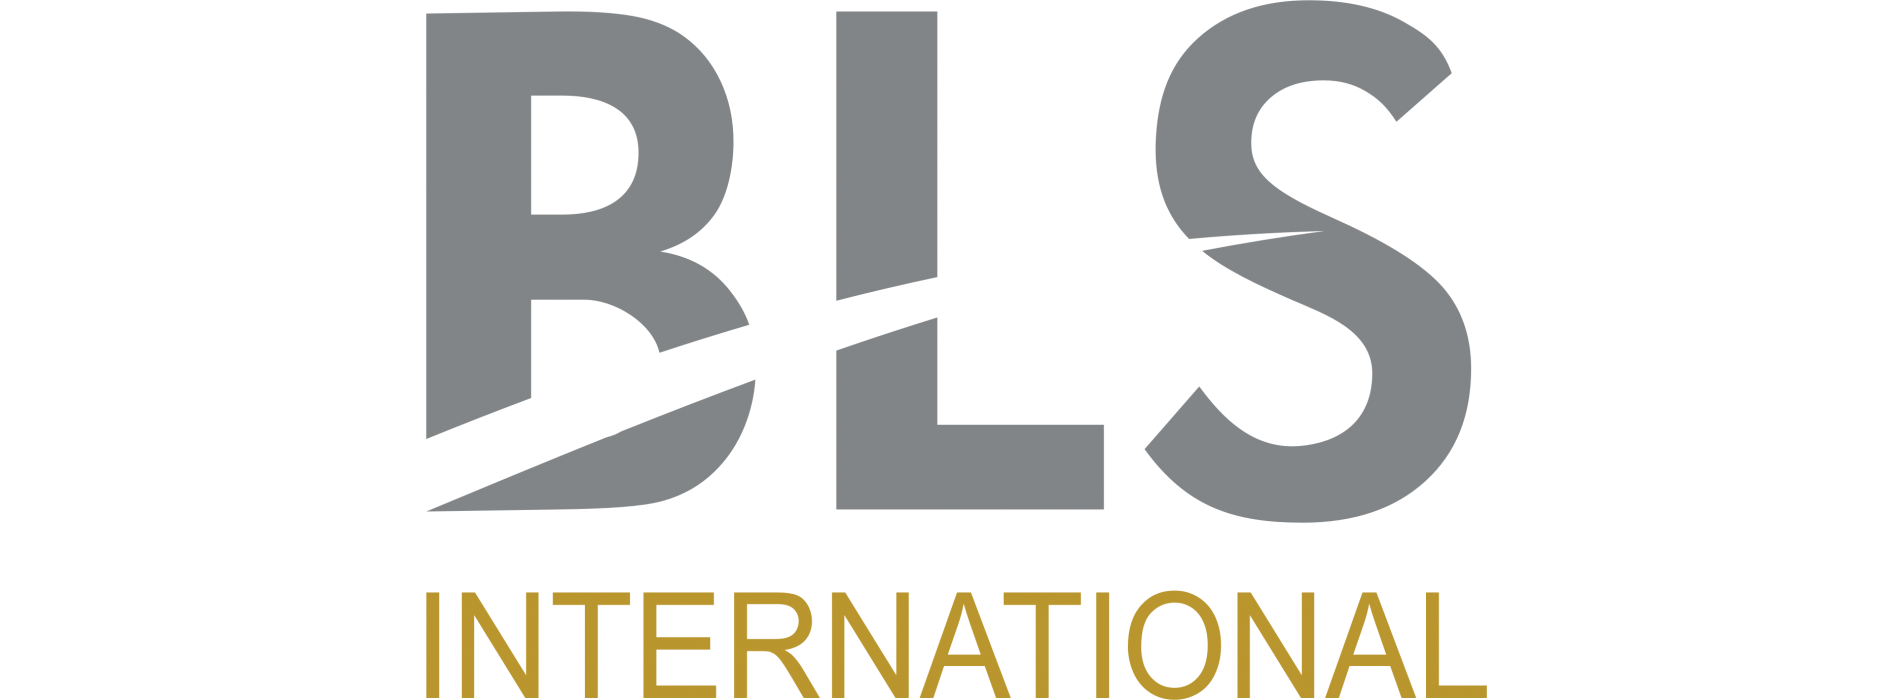 BLS International Services Ltd. acquires Delhi based Starfin India Pvt. Ltd.